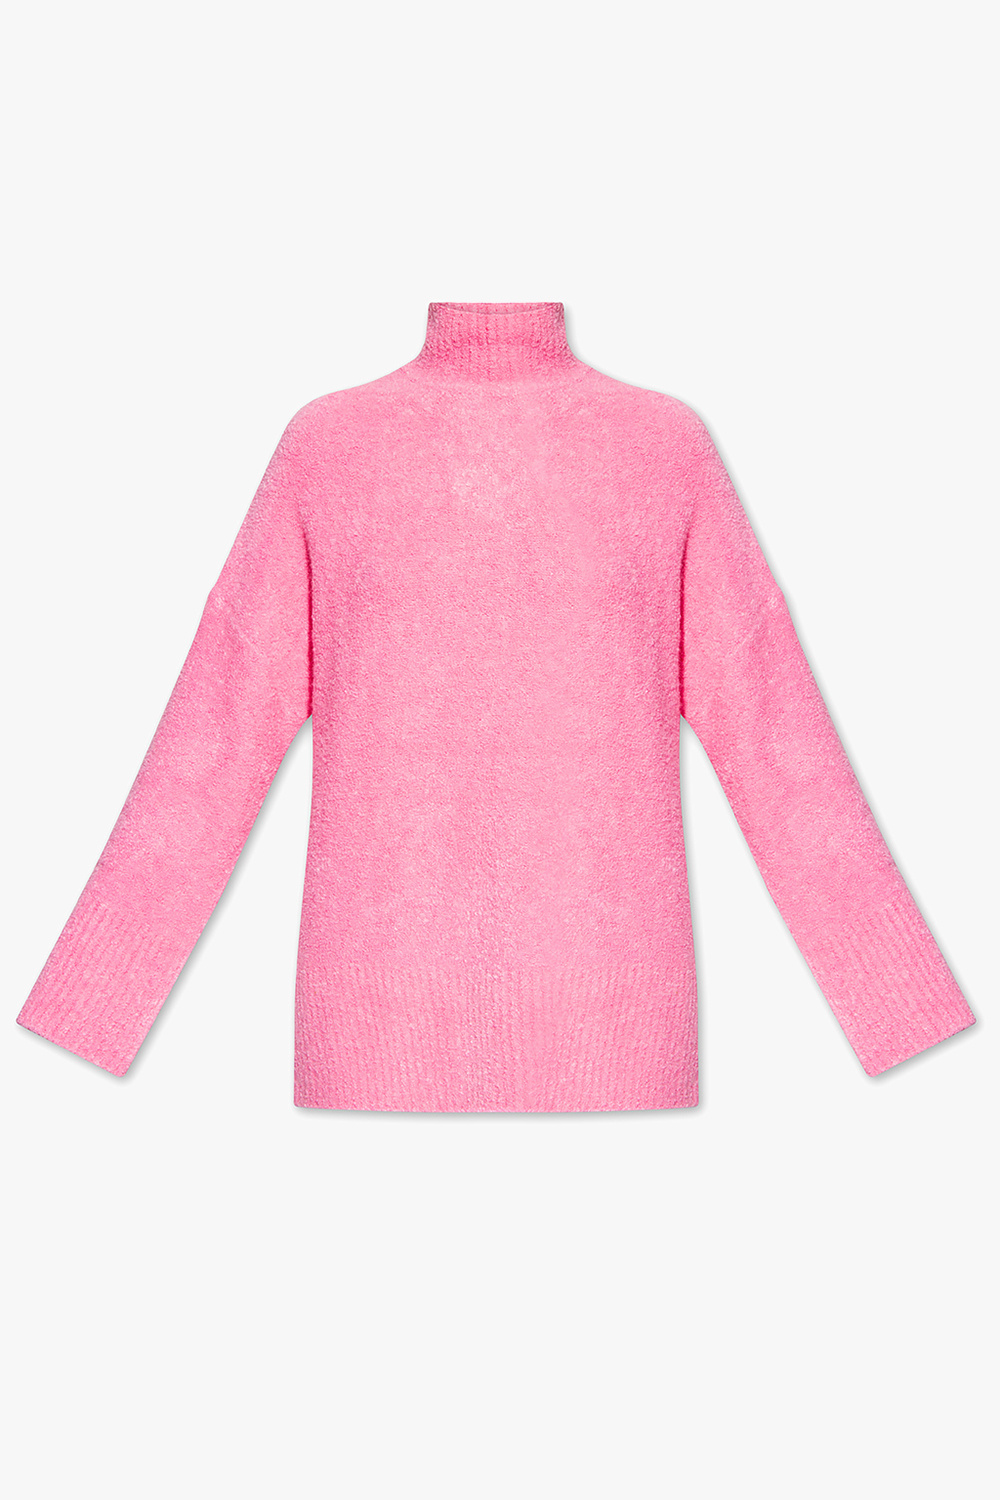 Samsøe Samsøe ‘Jessi’ loose-fitting sweater